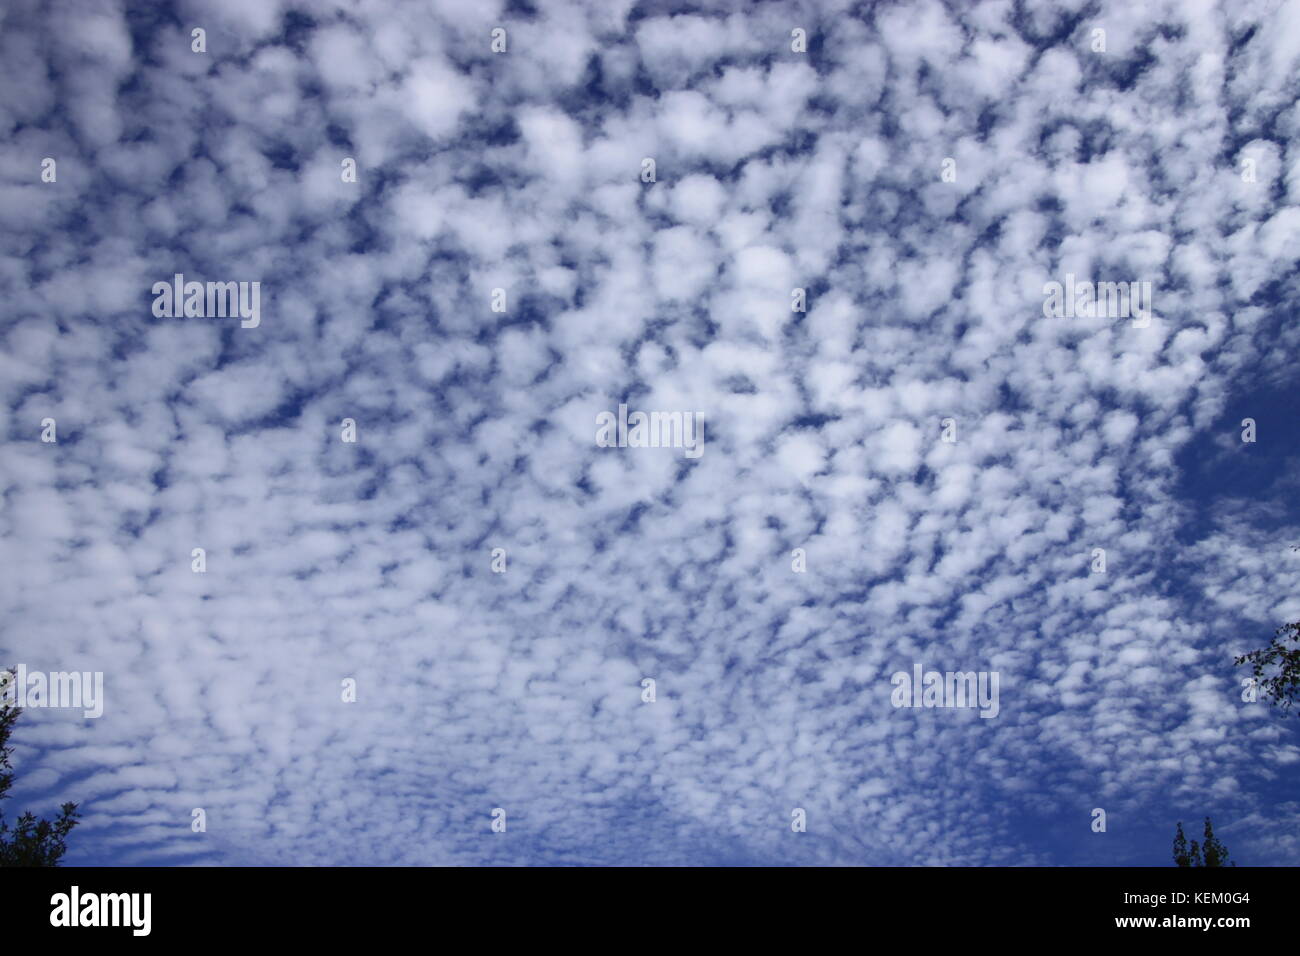 Mackerel sky cloud formations near French coast Landrezac Brittany no buildings or foreground Stock Photo